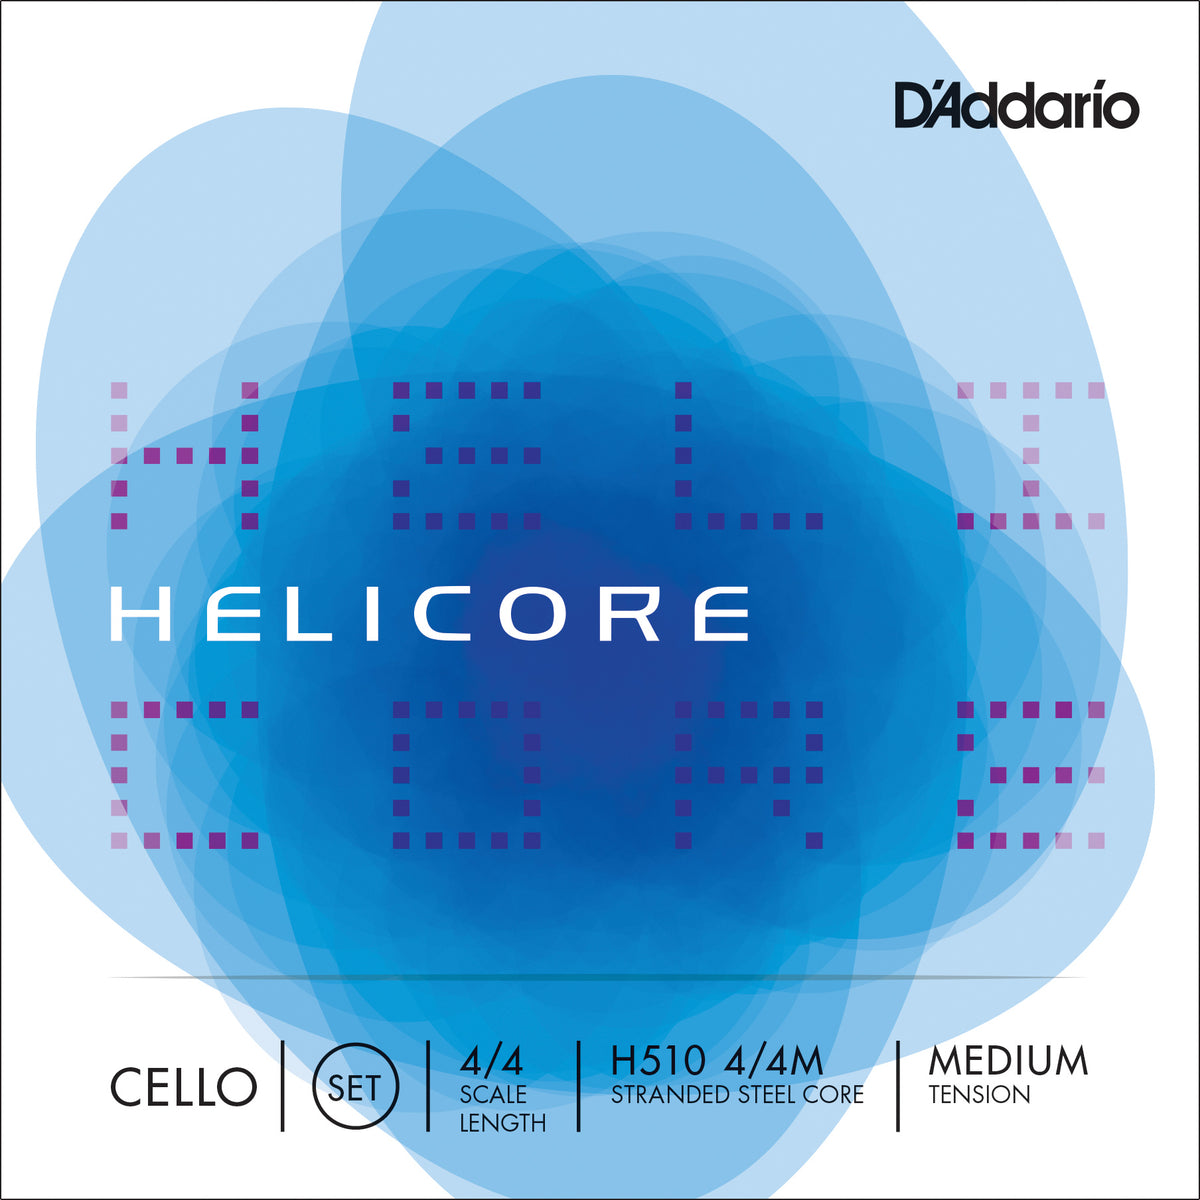 Encordado Cello D'Addario Helicore H510 4/4